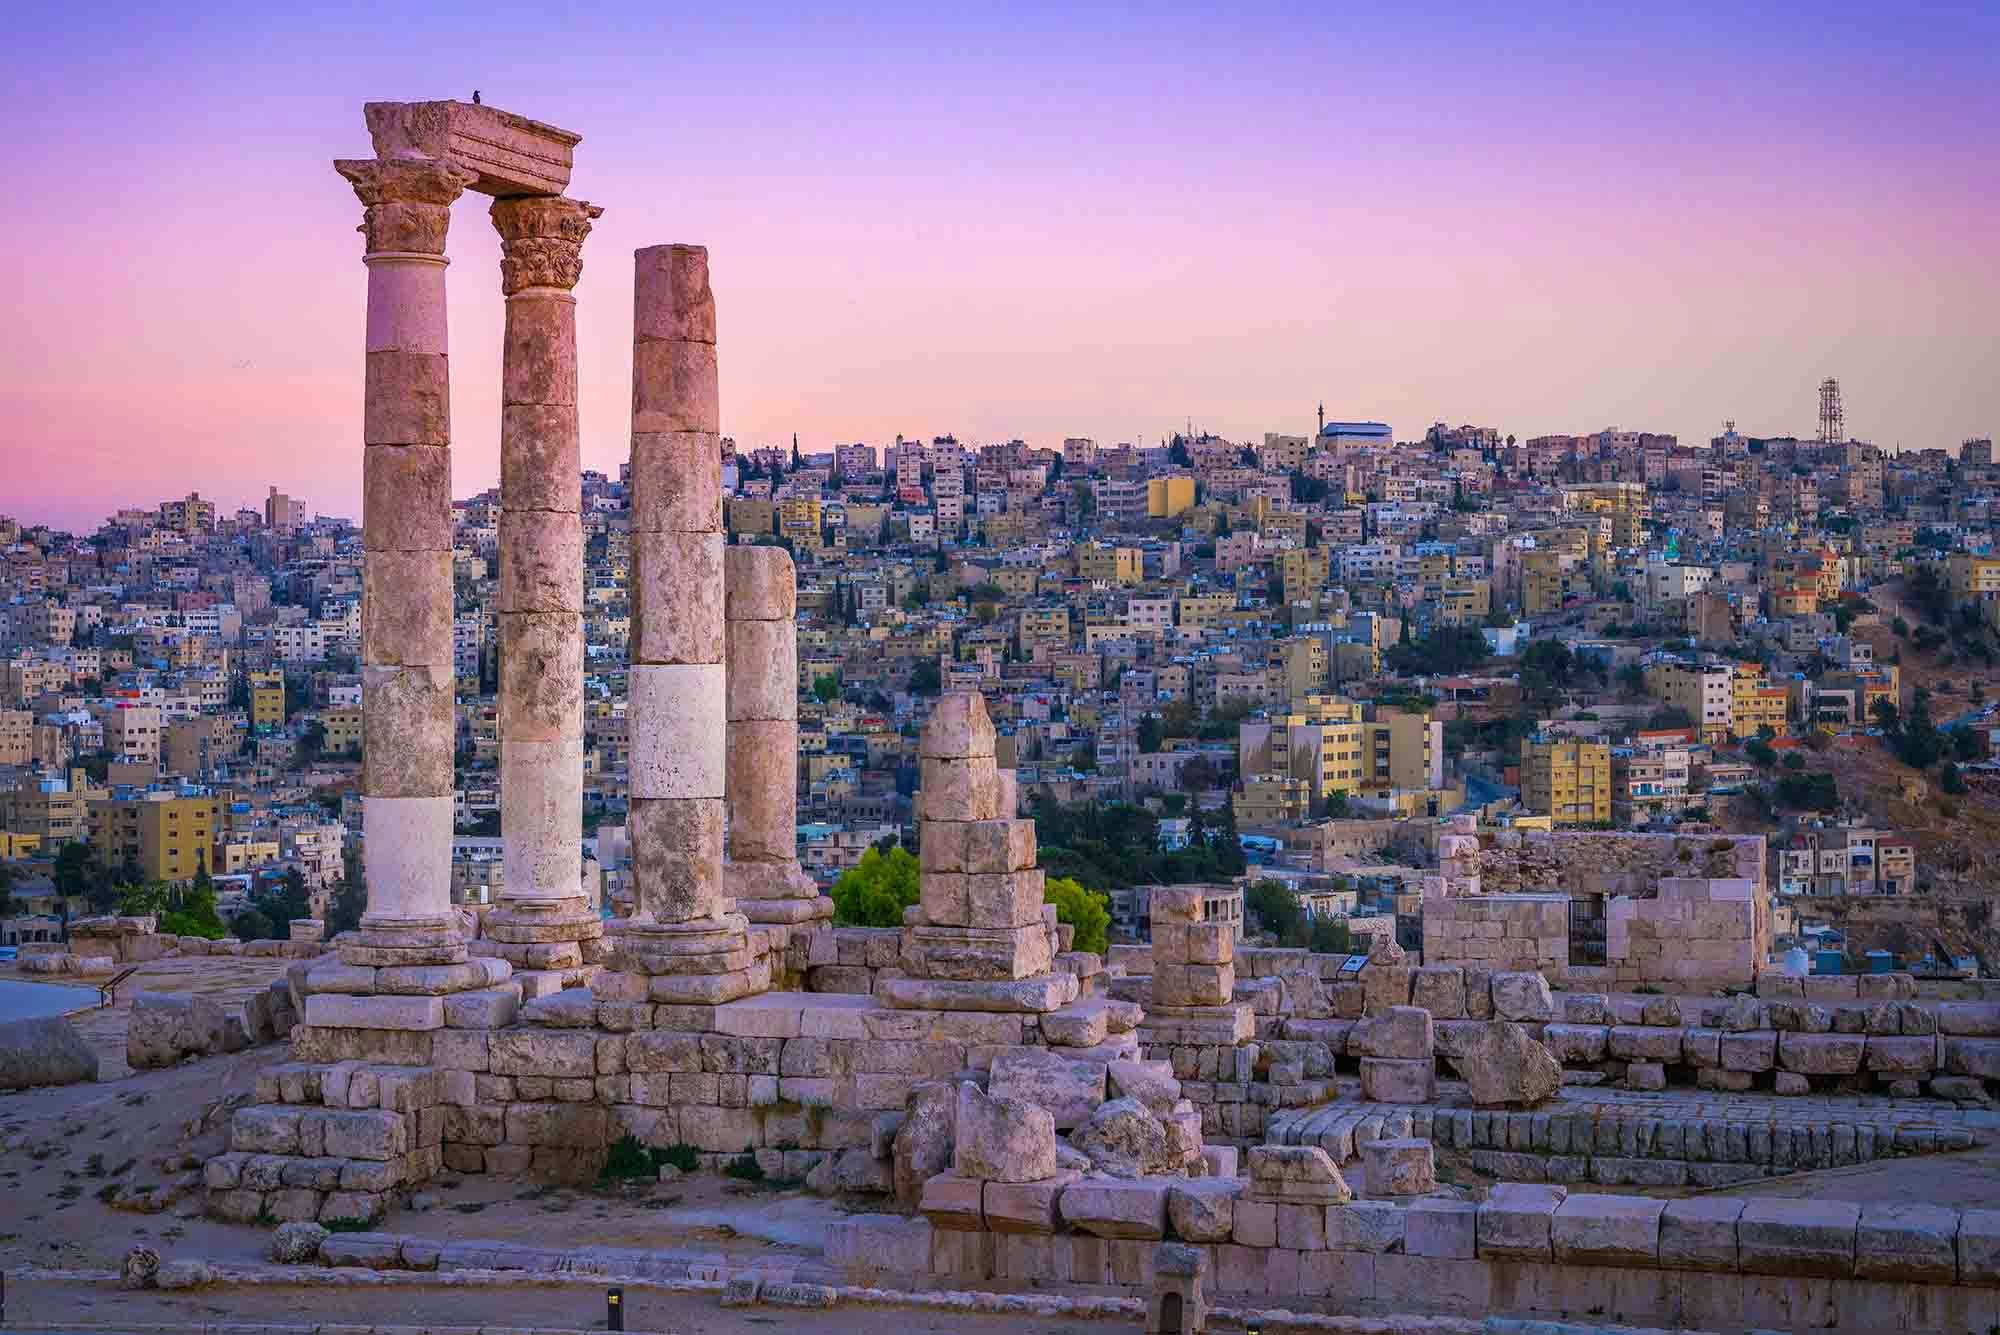 Amman, Jordan is a popular spot with movie makers